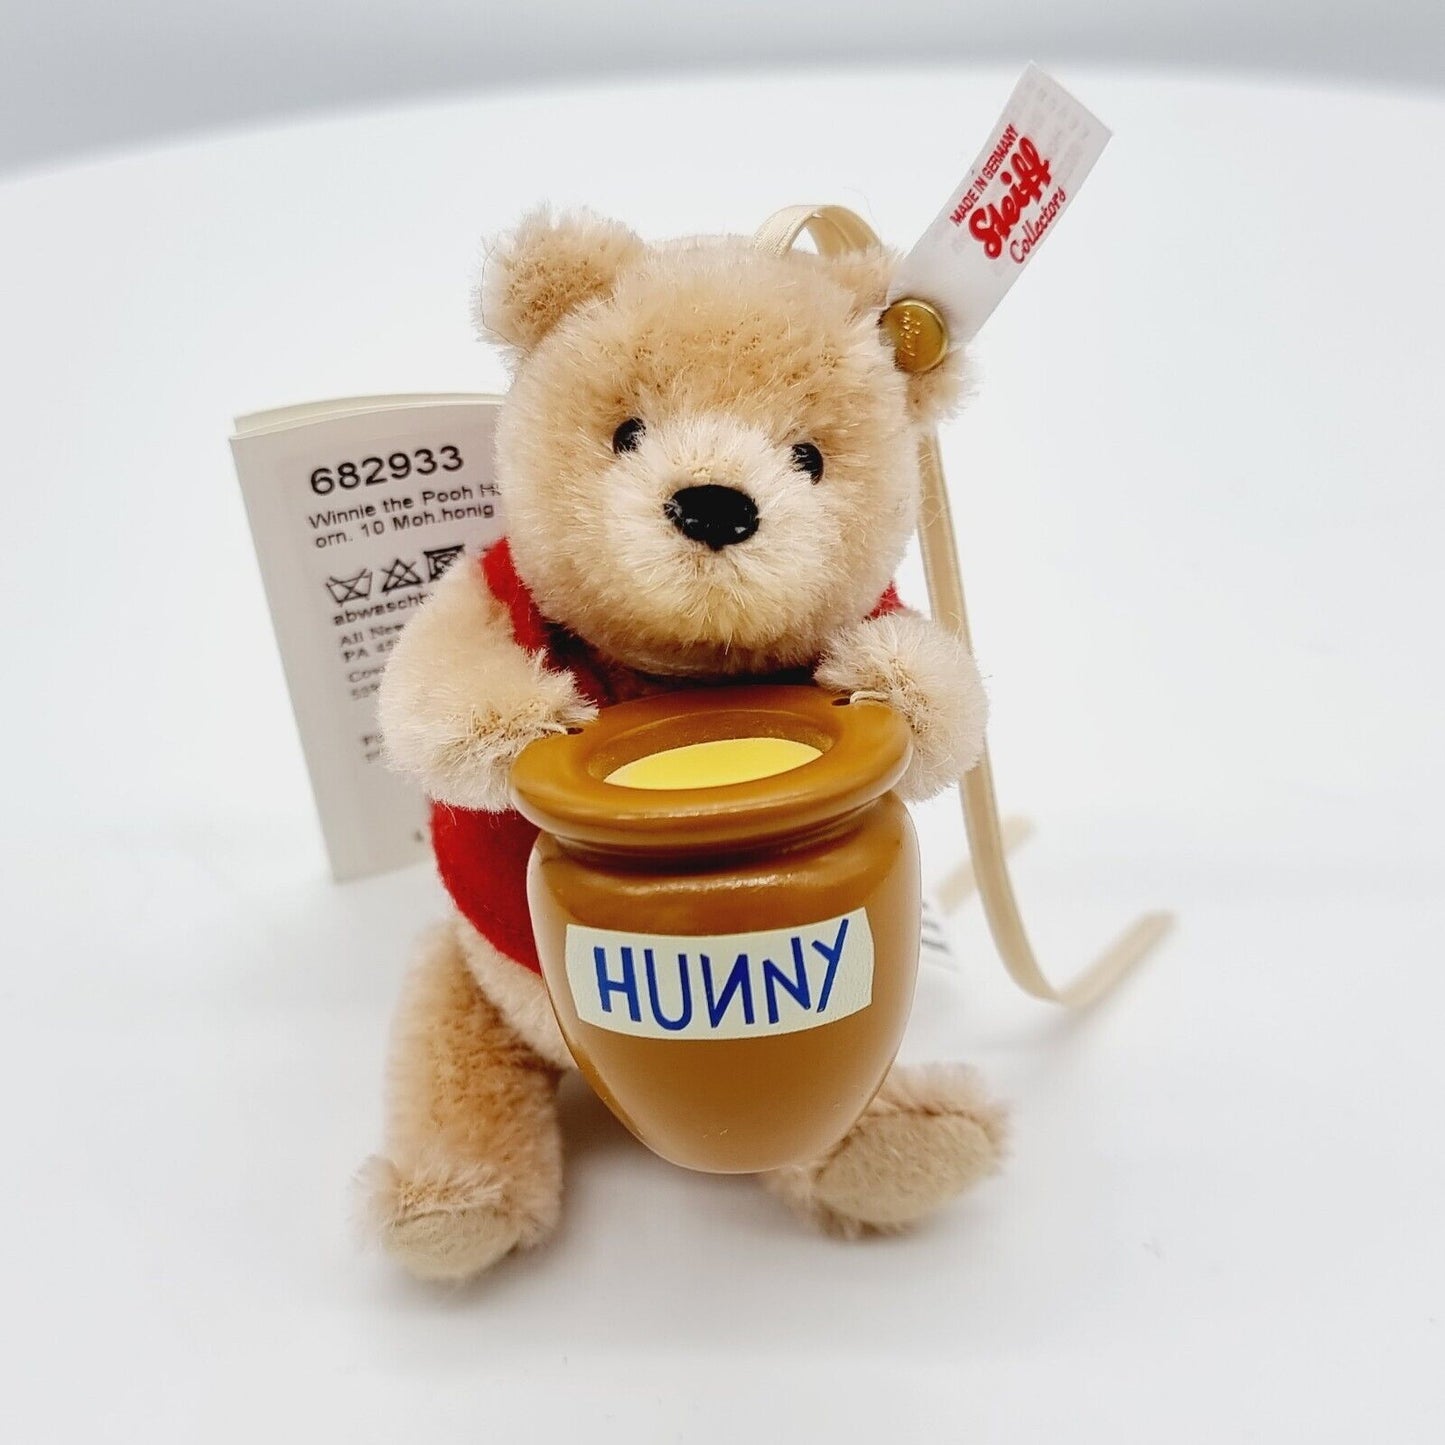 Steiff 682933 Ornament Teddybär Winnie the Pooh mit Honigtopf limitiert 2015